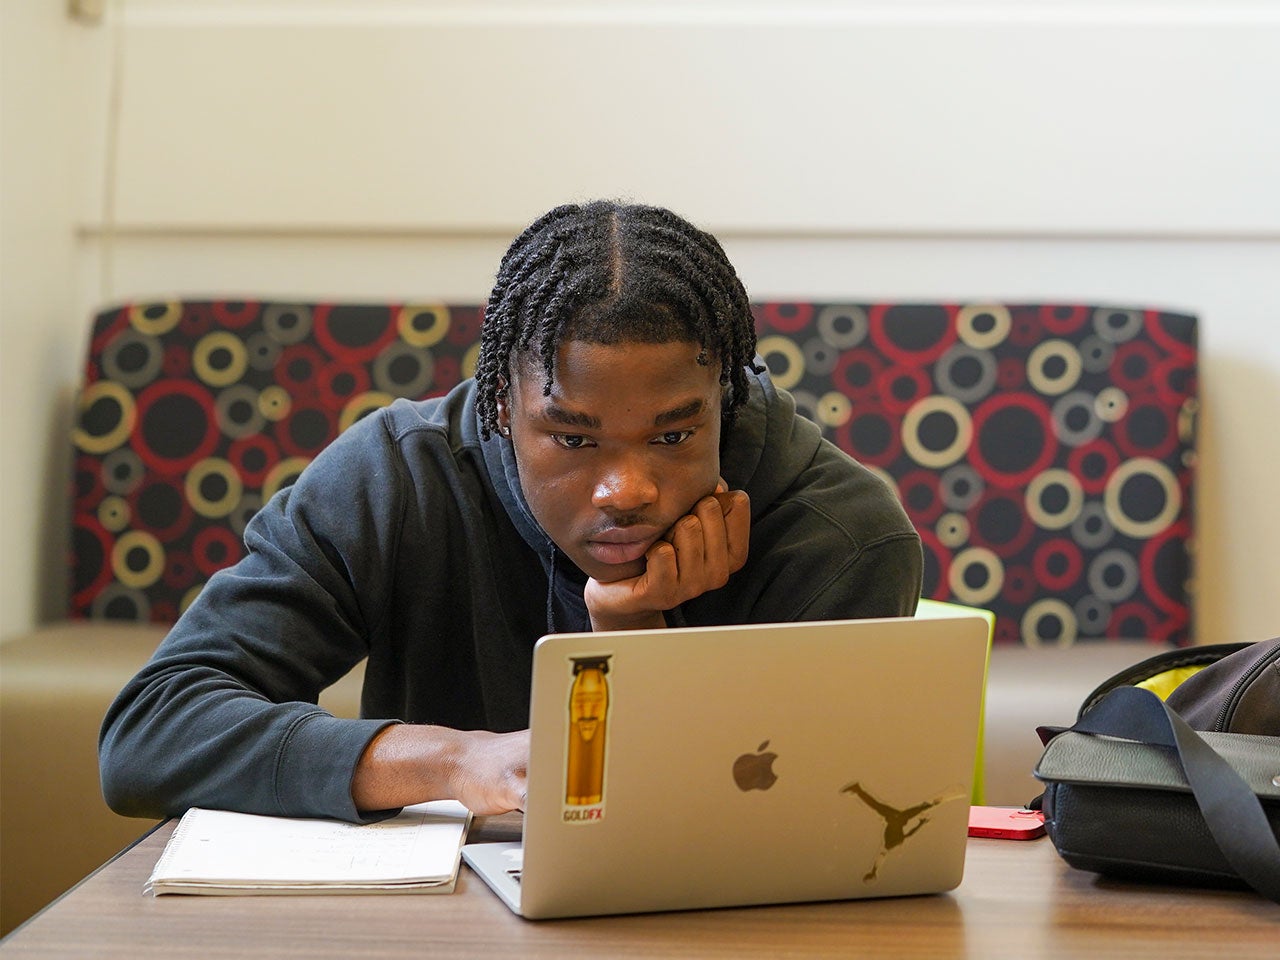 A ˽̳ Davis student researches on a silver laptop.